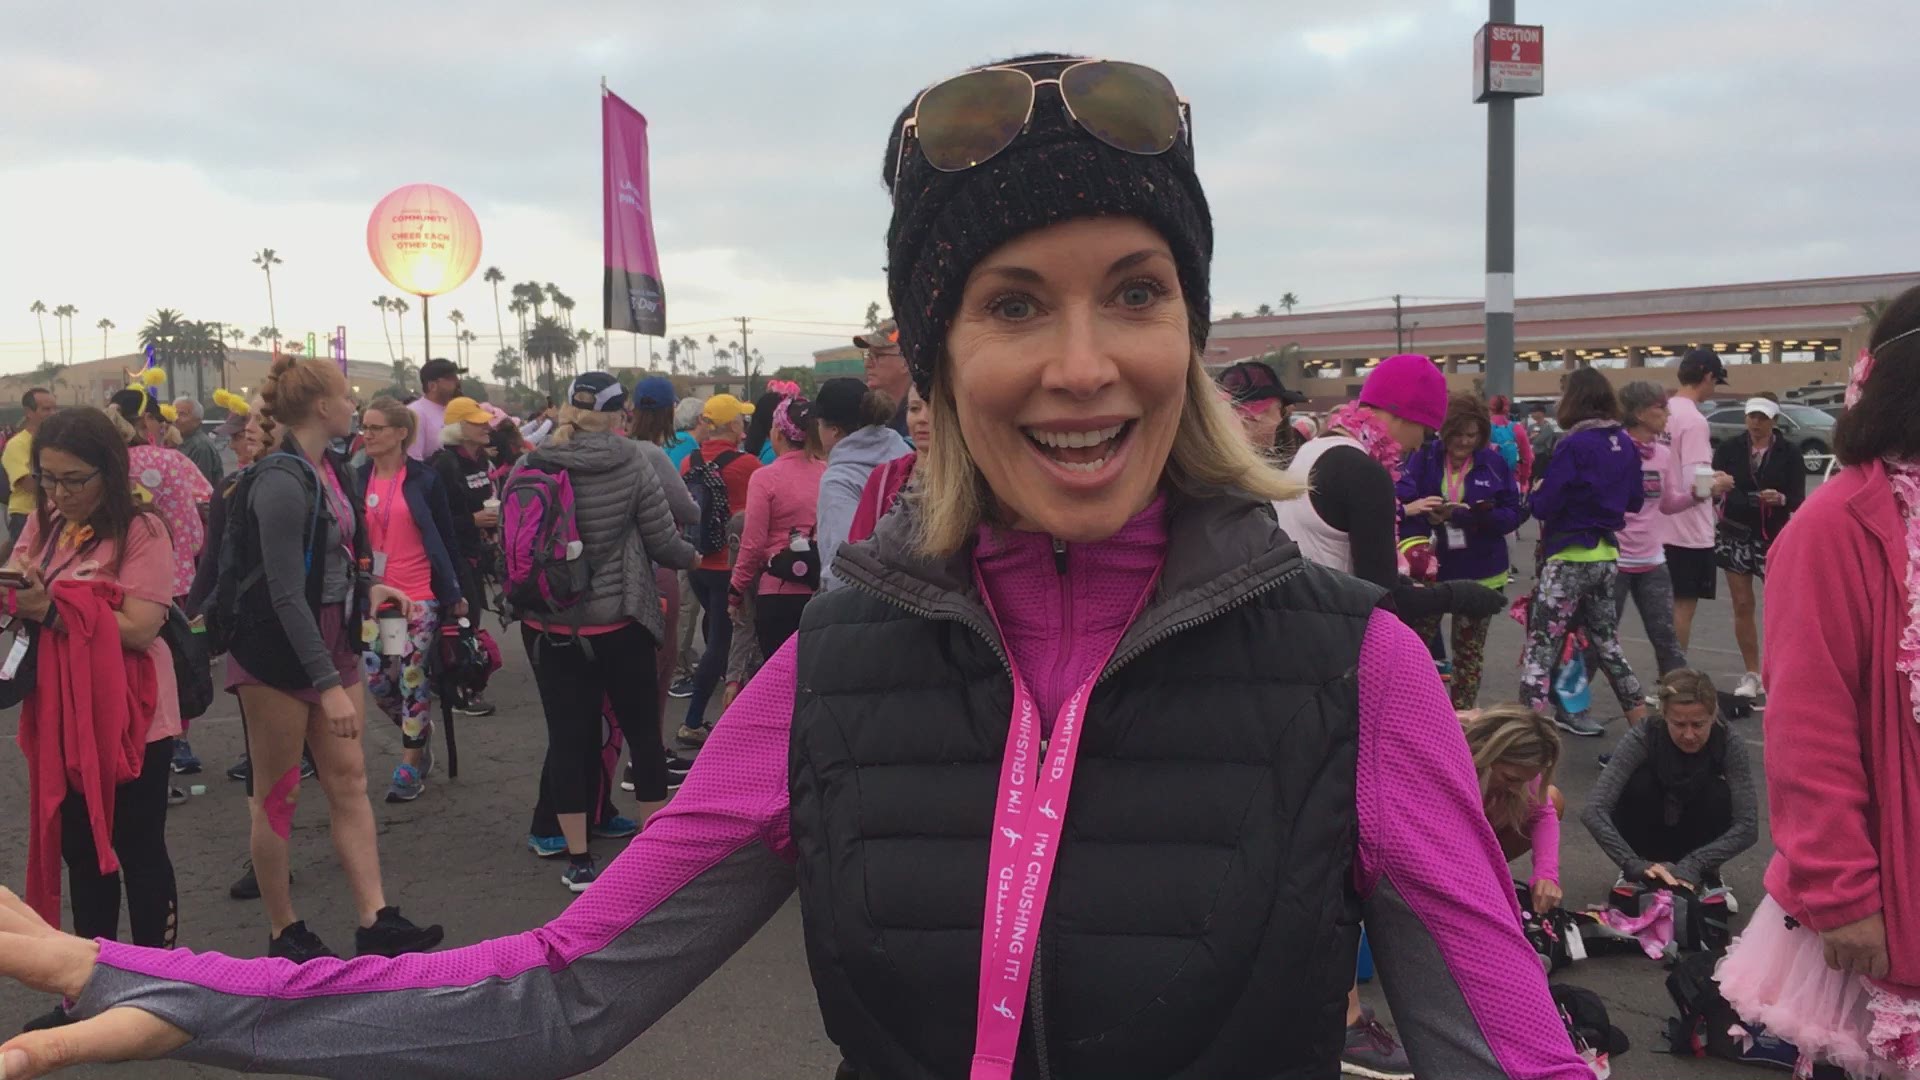 Susan G. Komen 3-Day, 60-mile journey kicks off Friday morning to help end breast cancer.